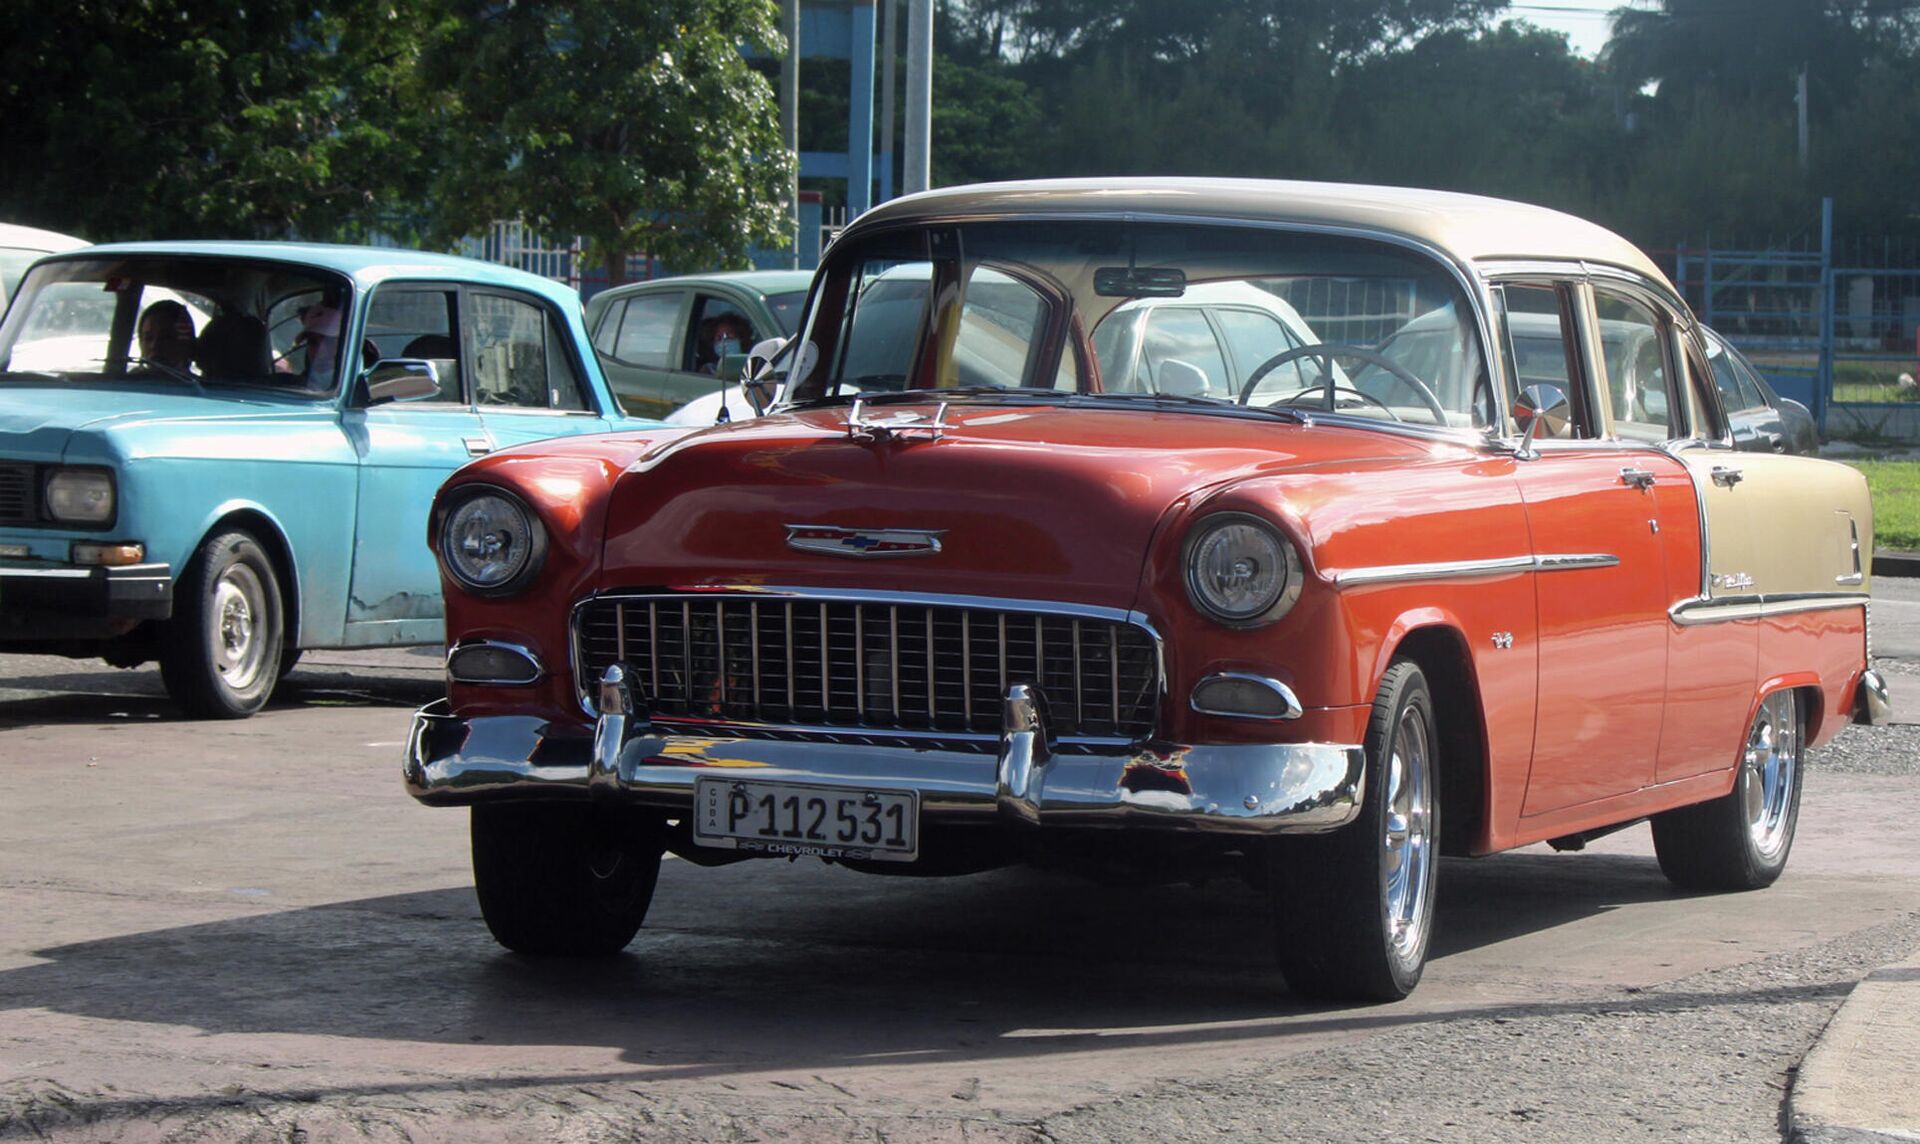 Autos de fabricación estadounidense con más de 65 años de explotación que aun circulan por las calles de Cuba - Sputnik Mundo, 1920, 05.10.2021